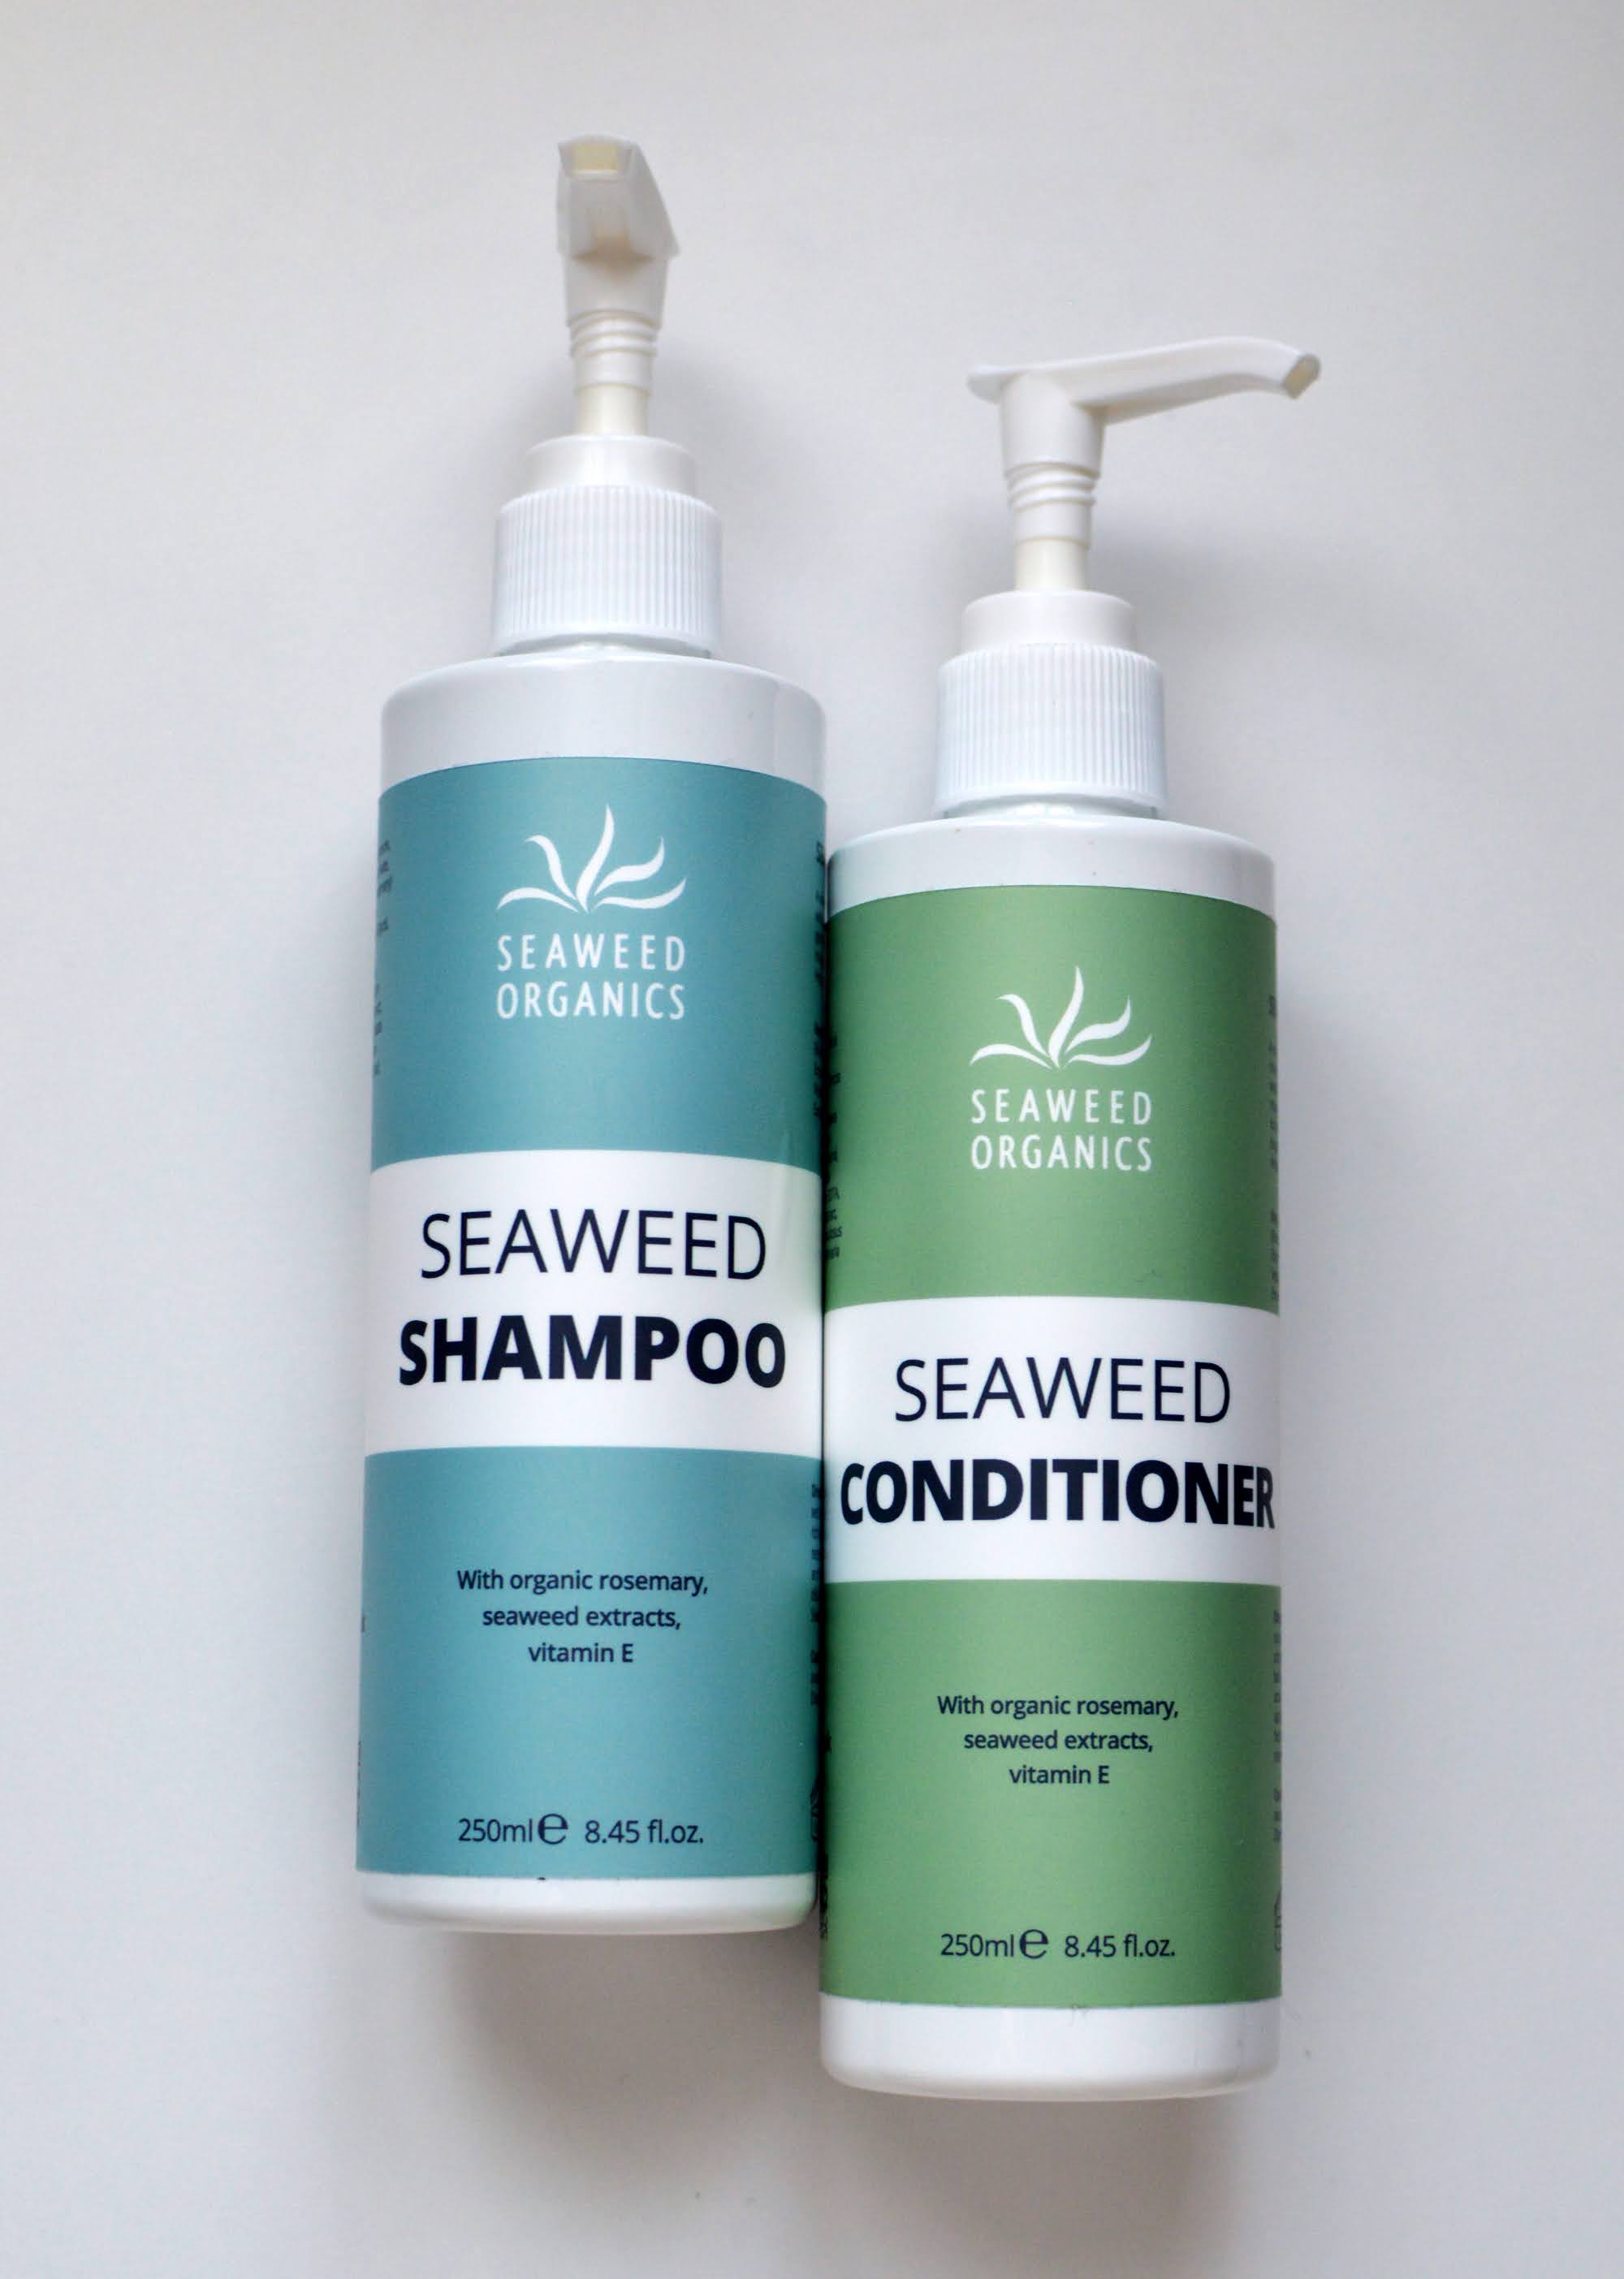 Diana Drummond Seaweed Organics Haircare